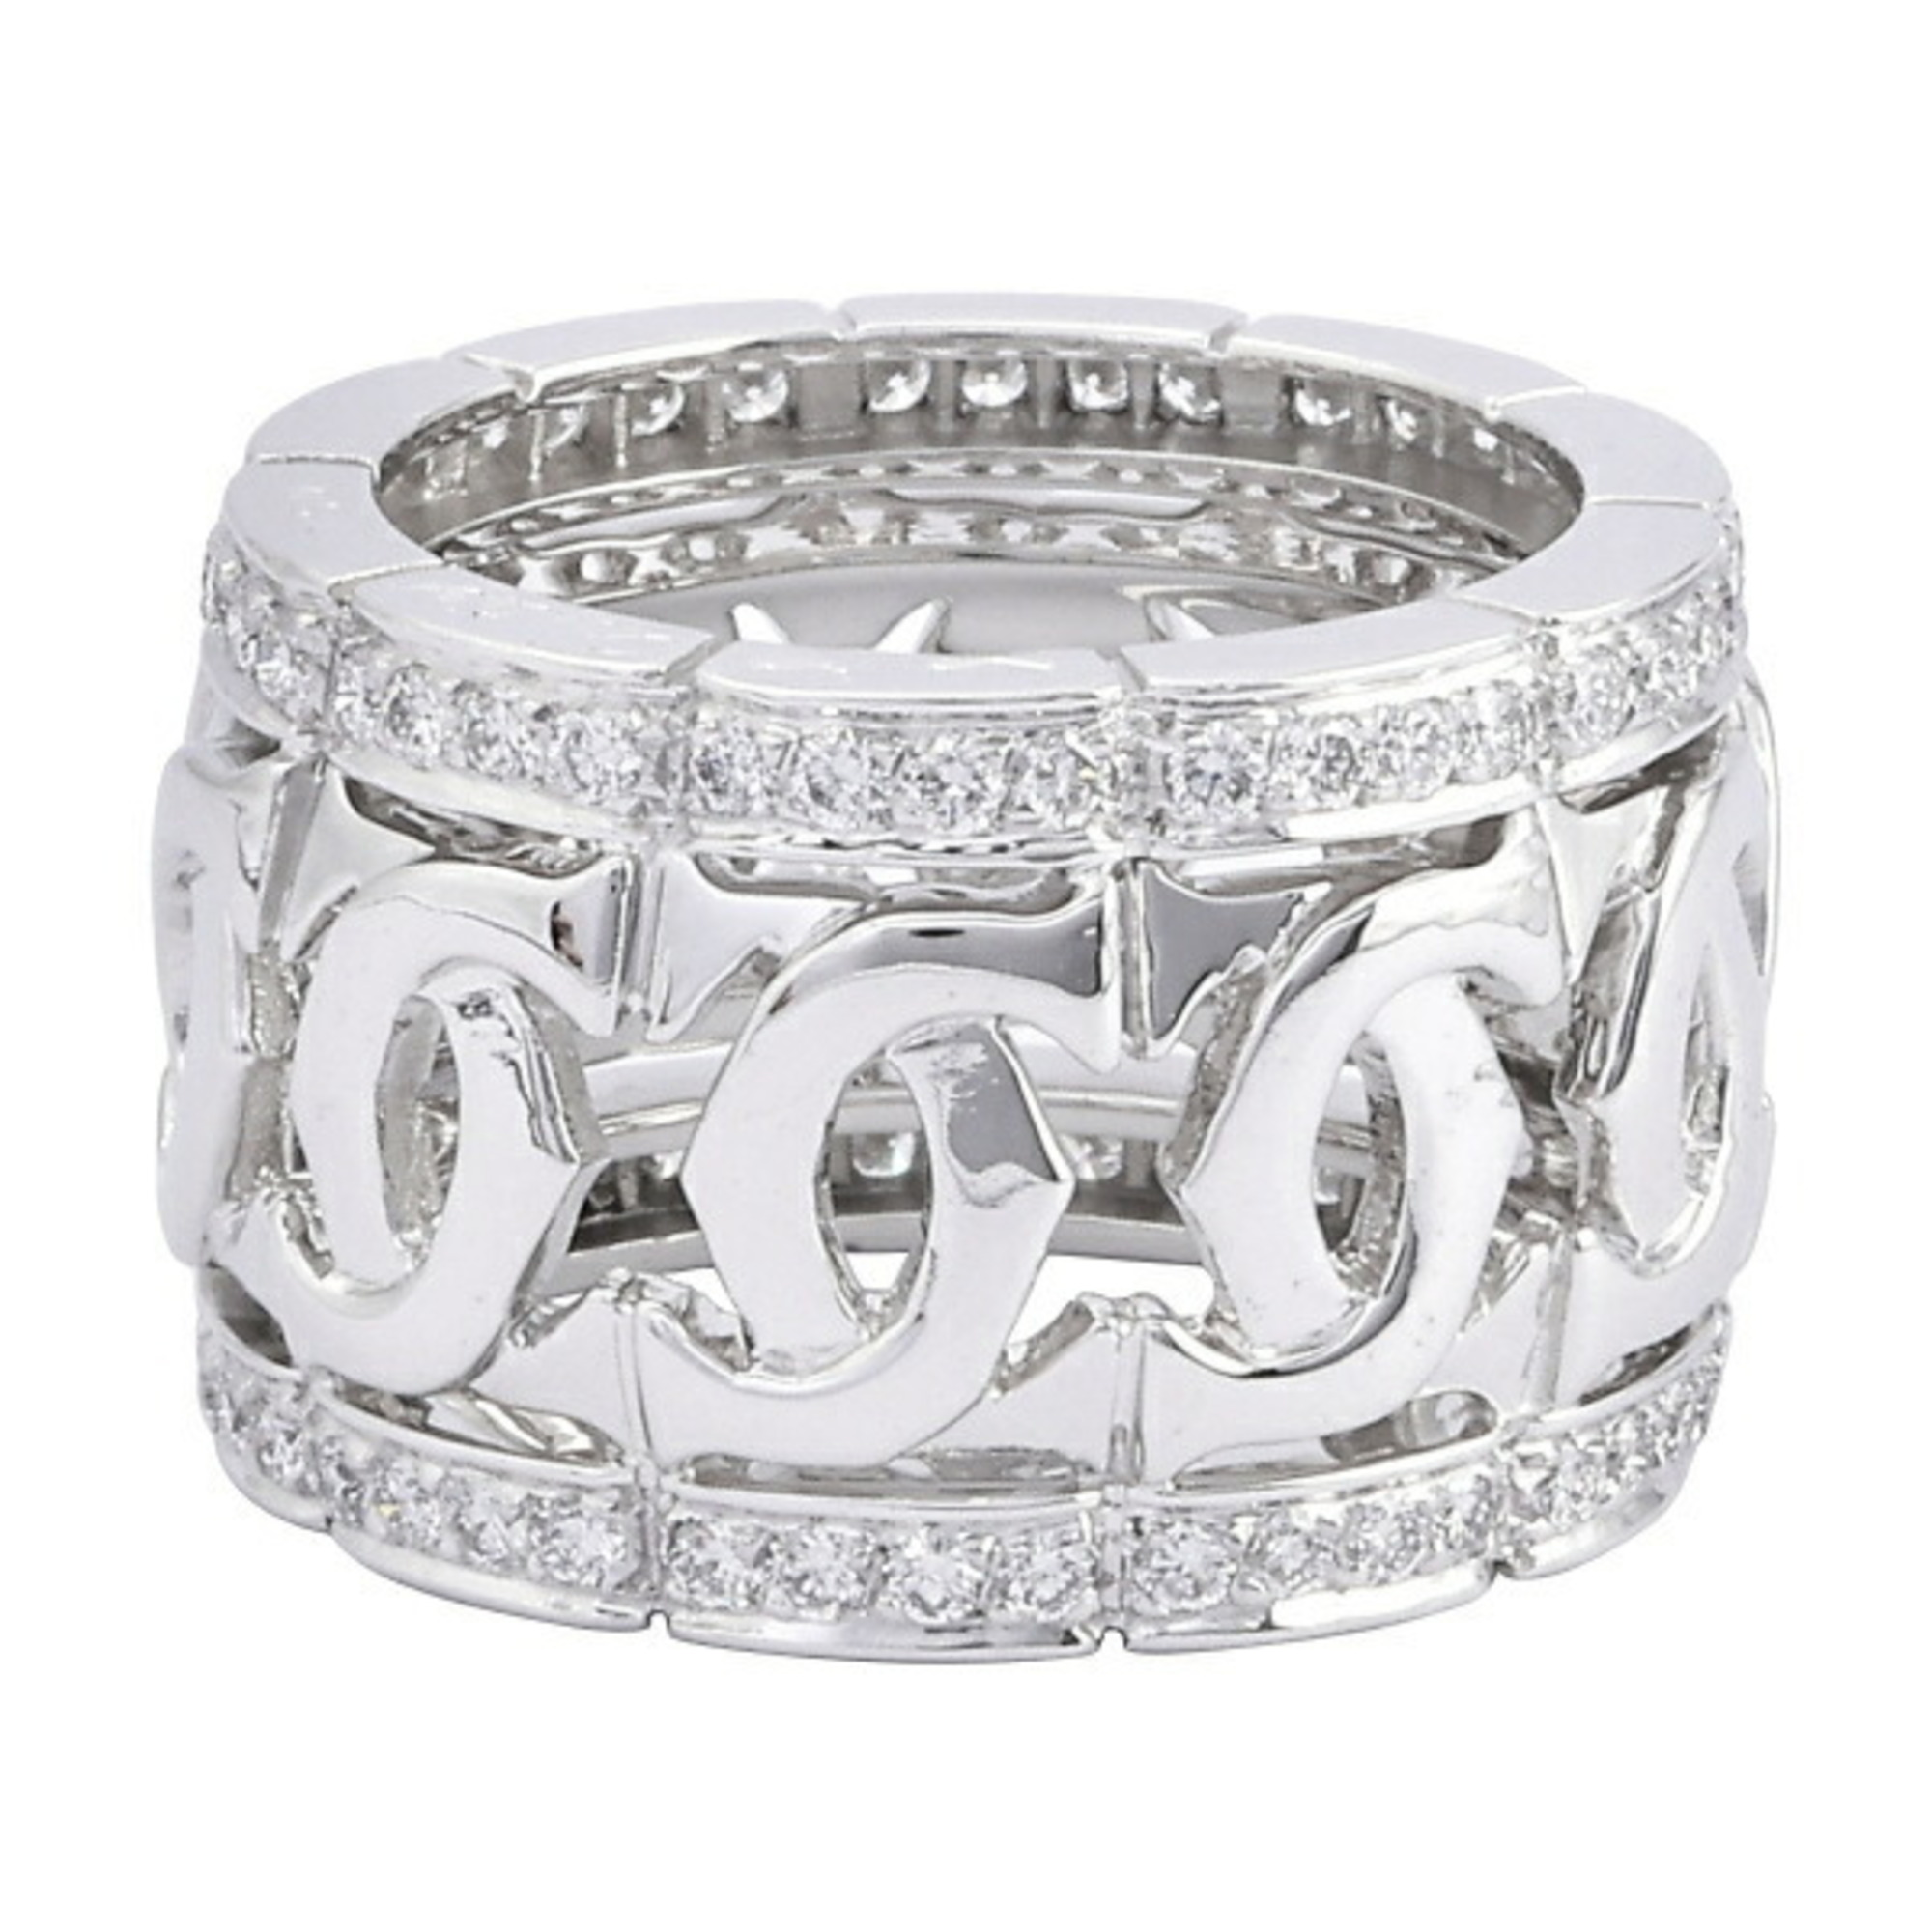 Cartier Entrelace K18WG white gold ring